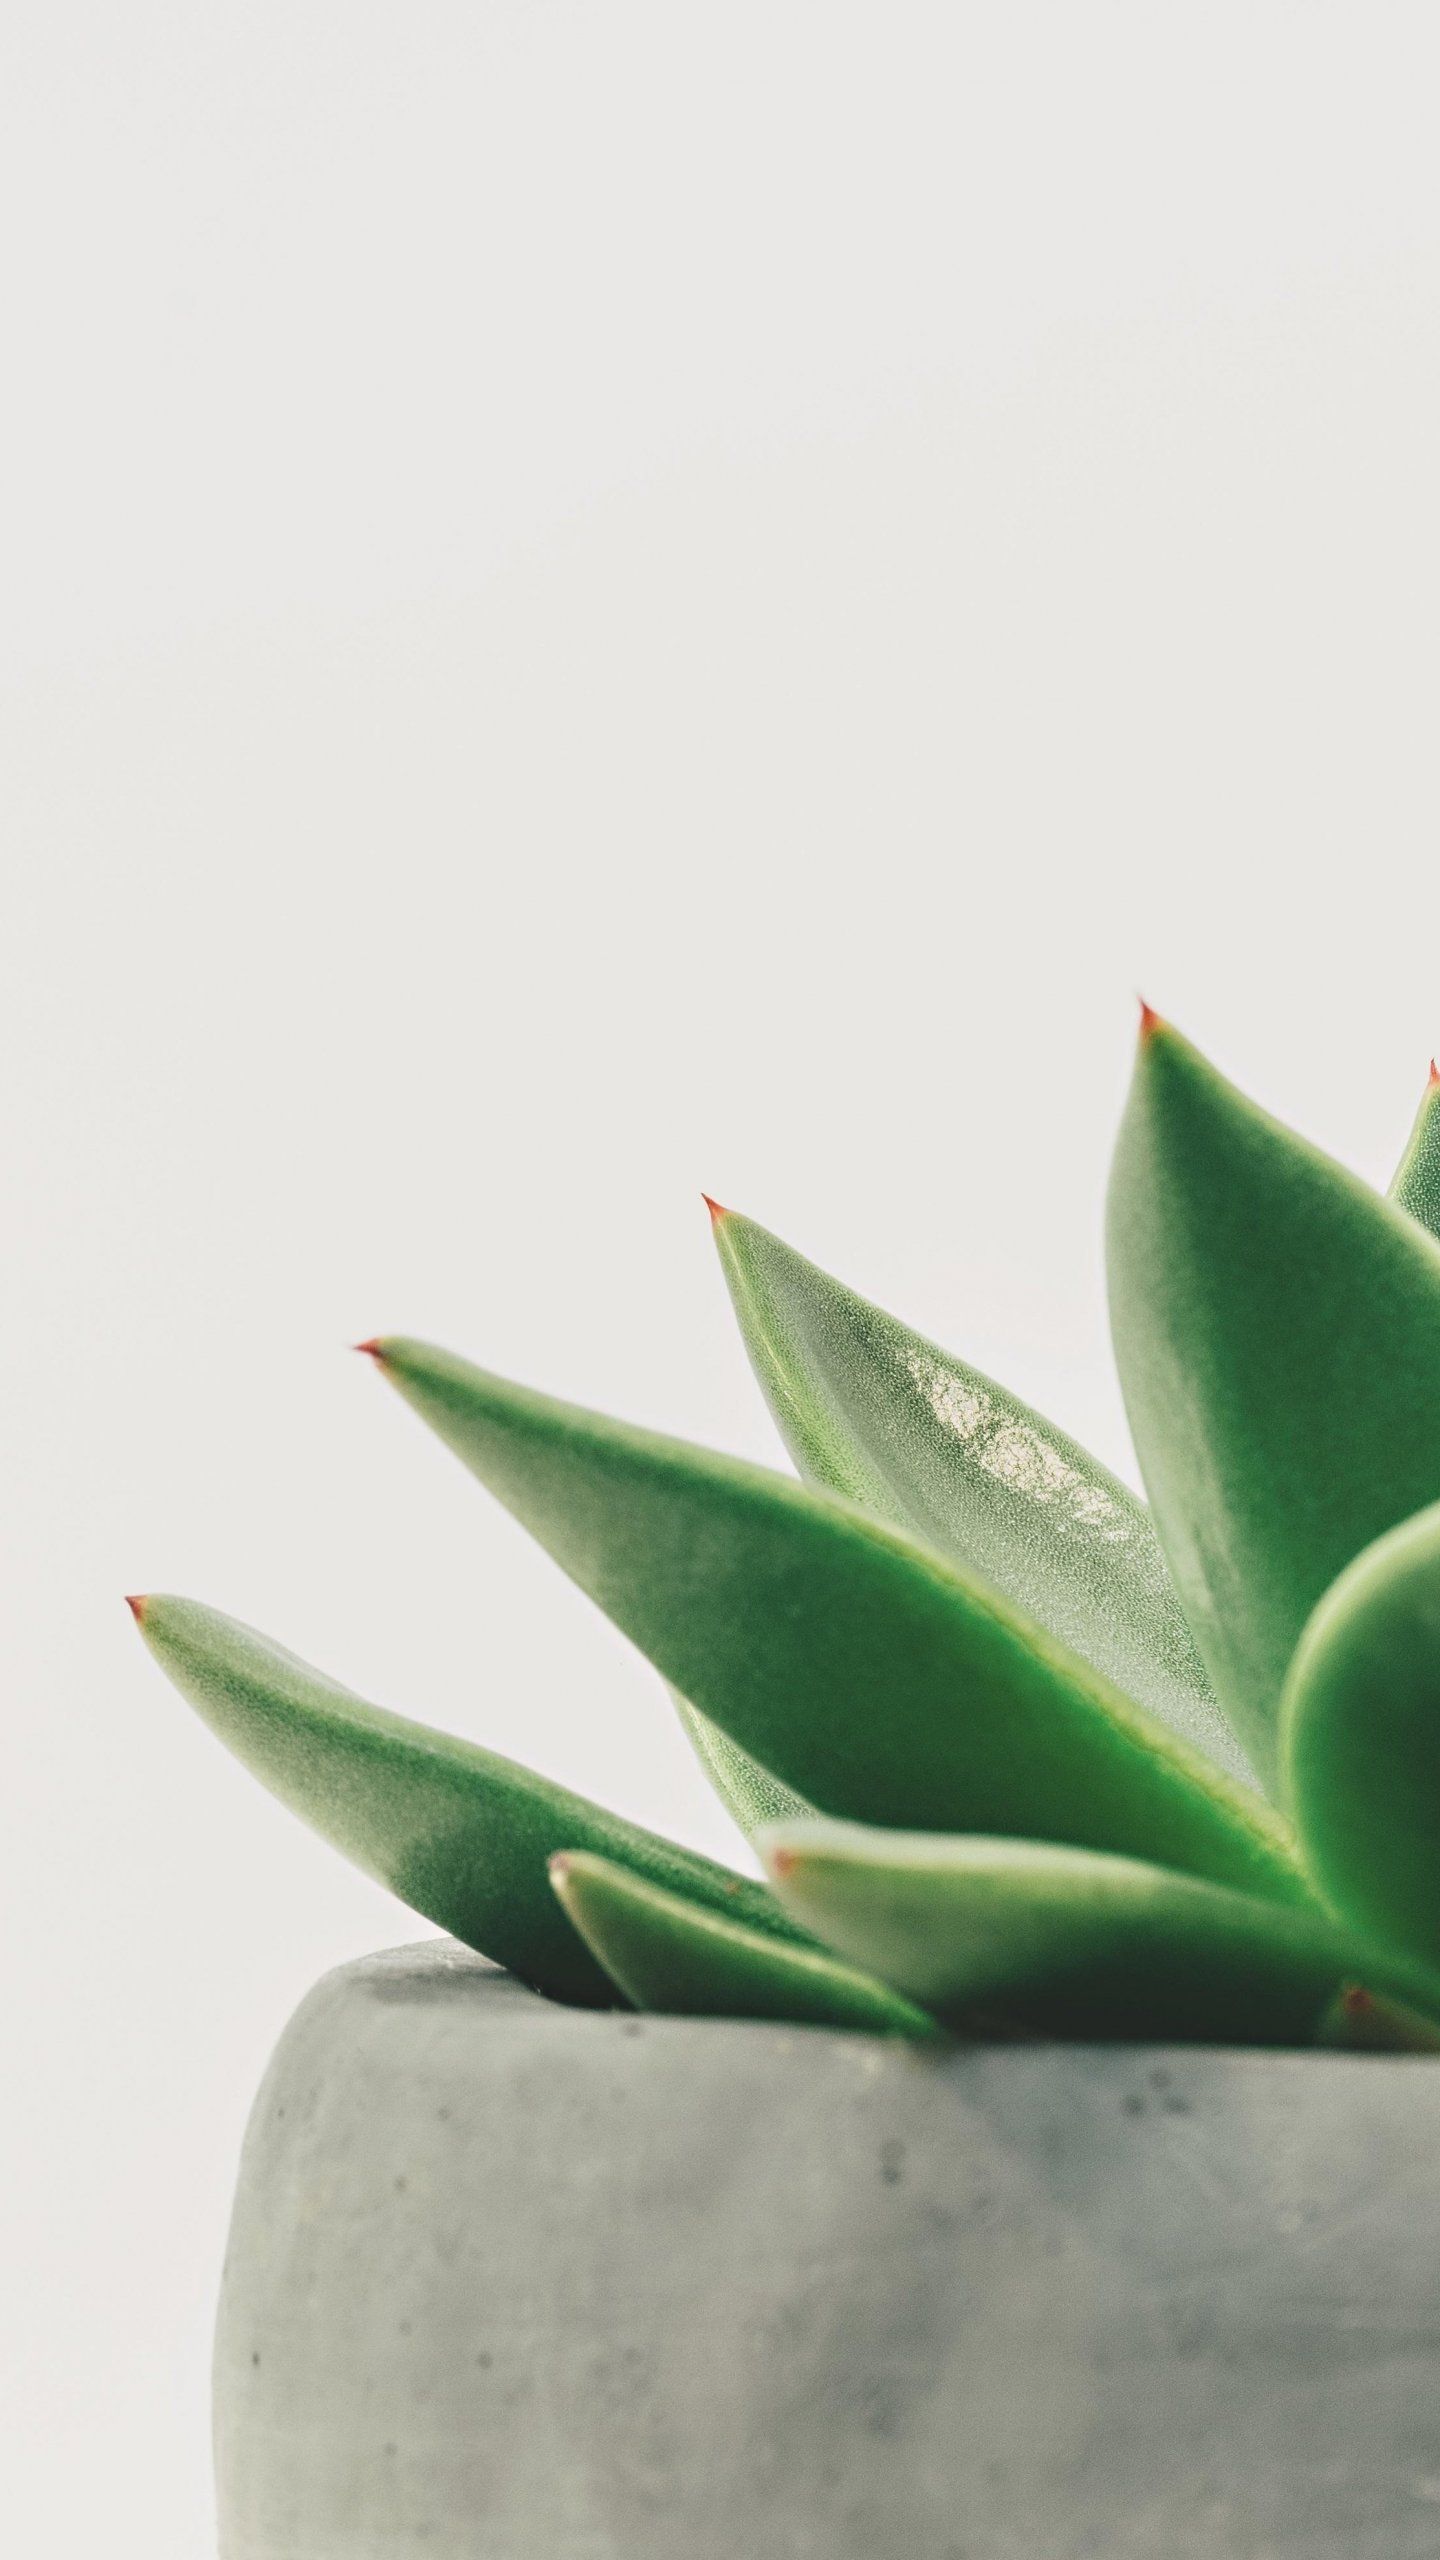 Minimalist Succulent  Wallpaper - iPhone, Android & Desktop Backgrounds -   12 plants Wallpaper leaves ideas